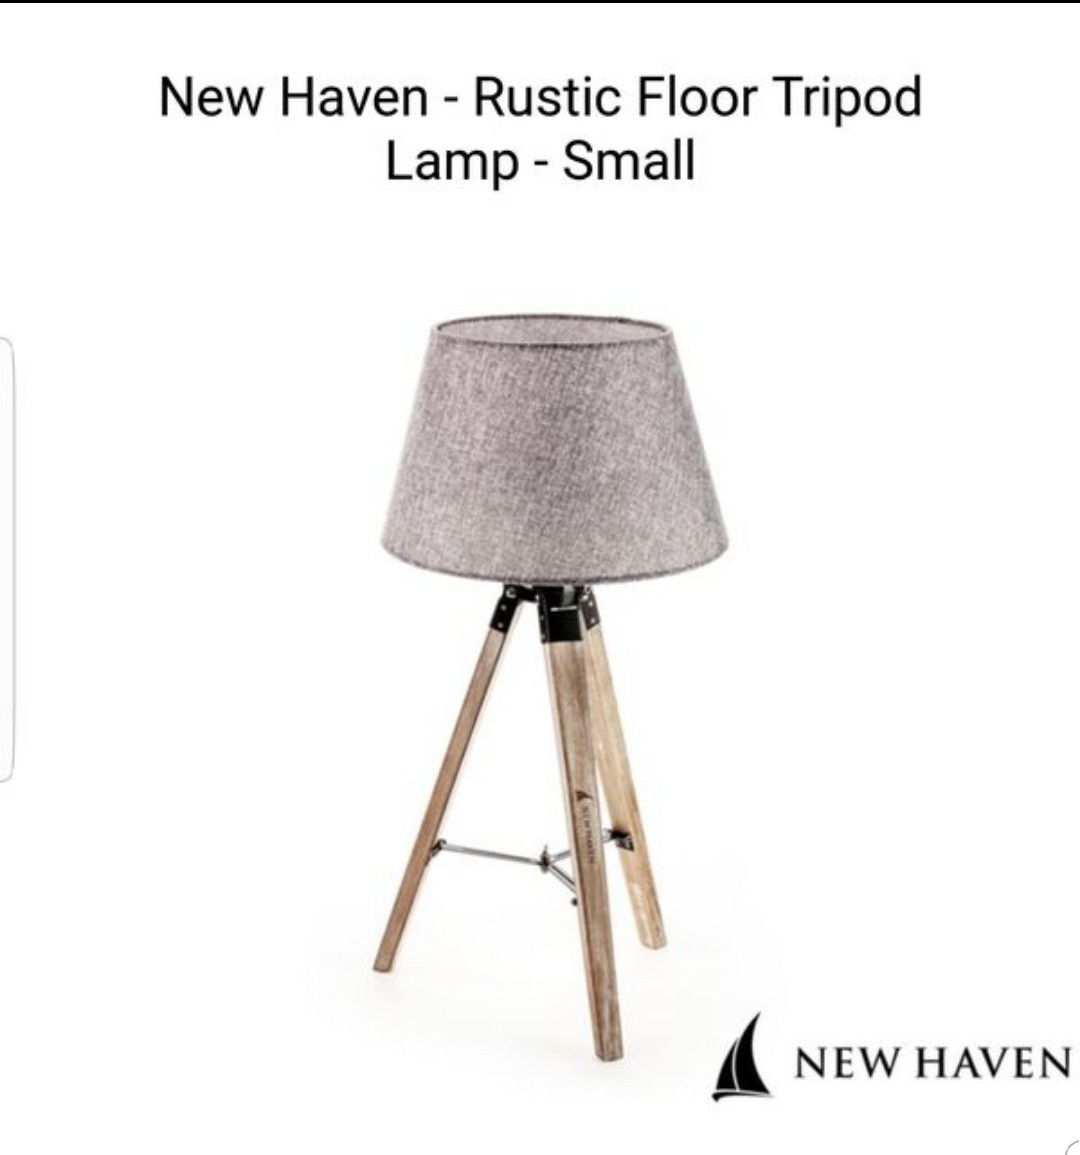 Rustic floor tripod lamp